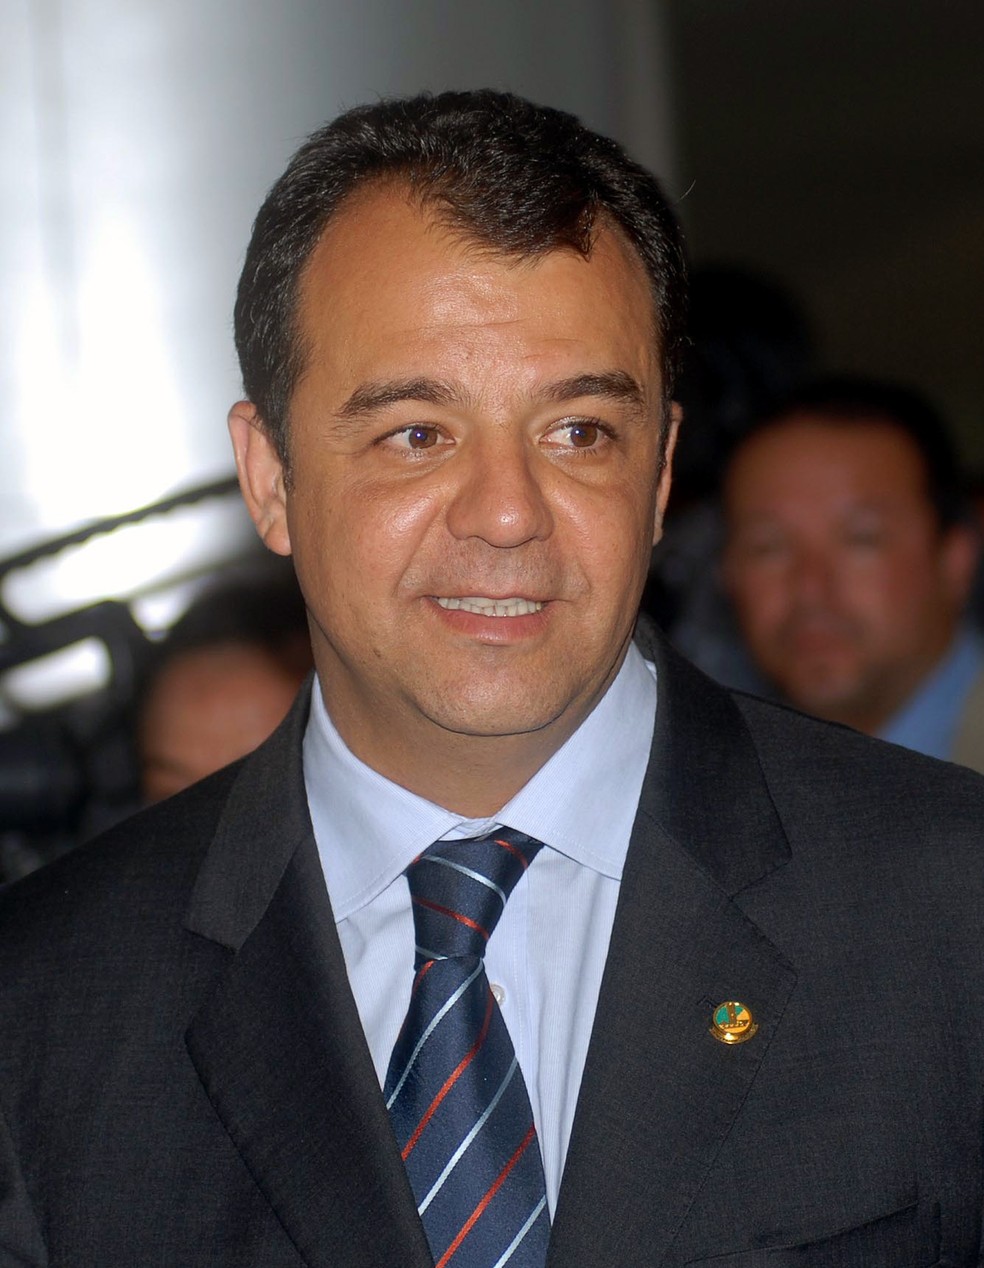 PF investiga fraude relacionada ao ex-governador do Rio, Sérgio Cabral — Foto: Wilson Dias/ABr, CC BY 3.0 BR <https://creativecommons.org/licenses/by/3.0/br/deed.en>, via Wikimedia Commons